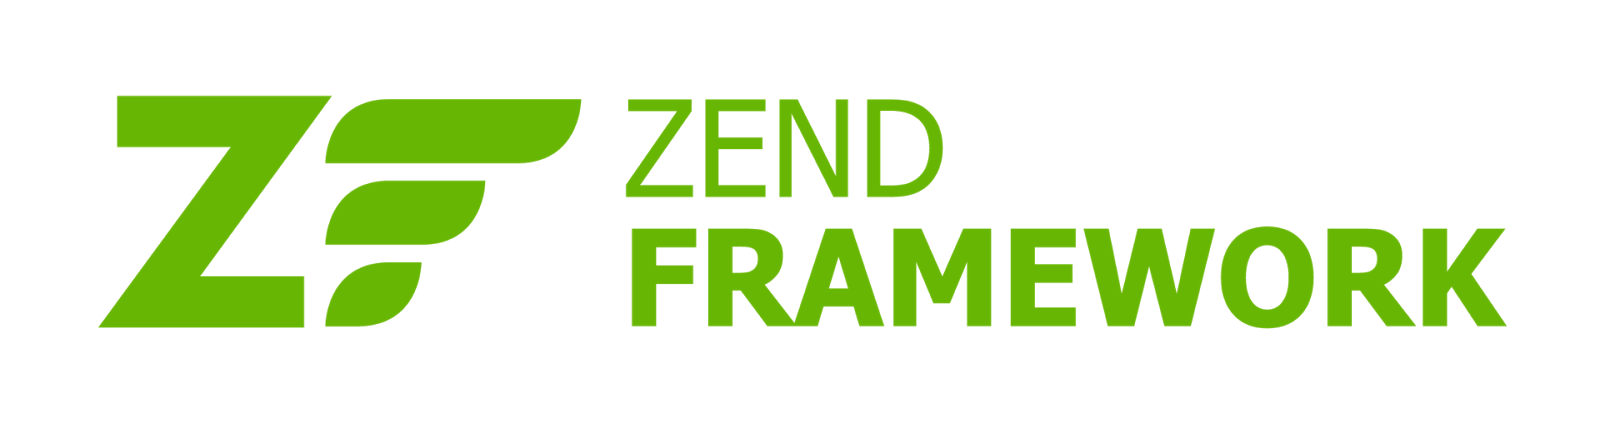 Zend framework resume